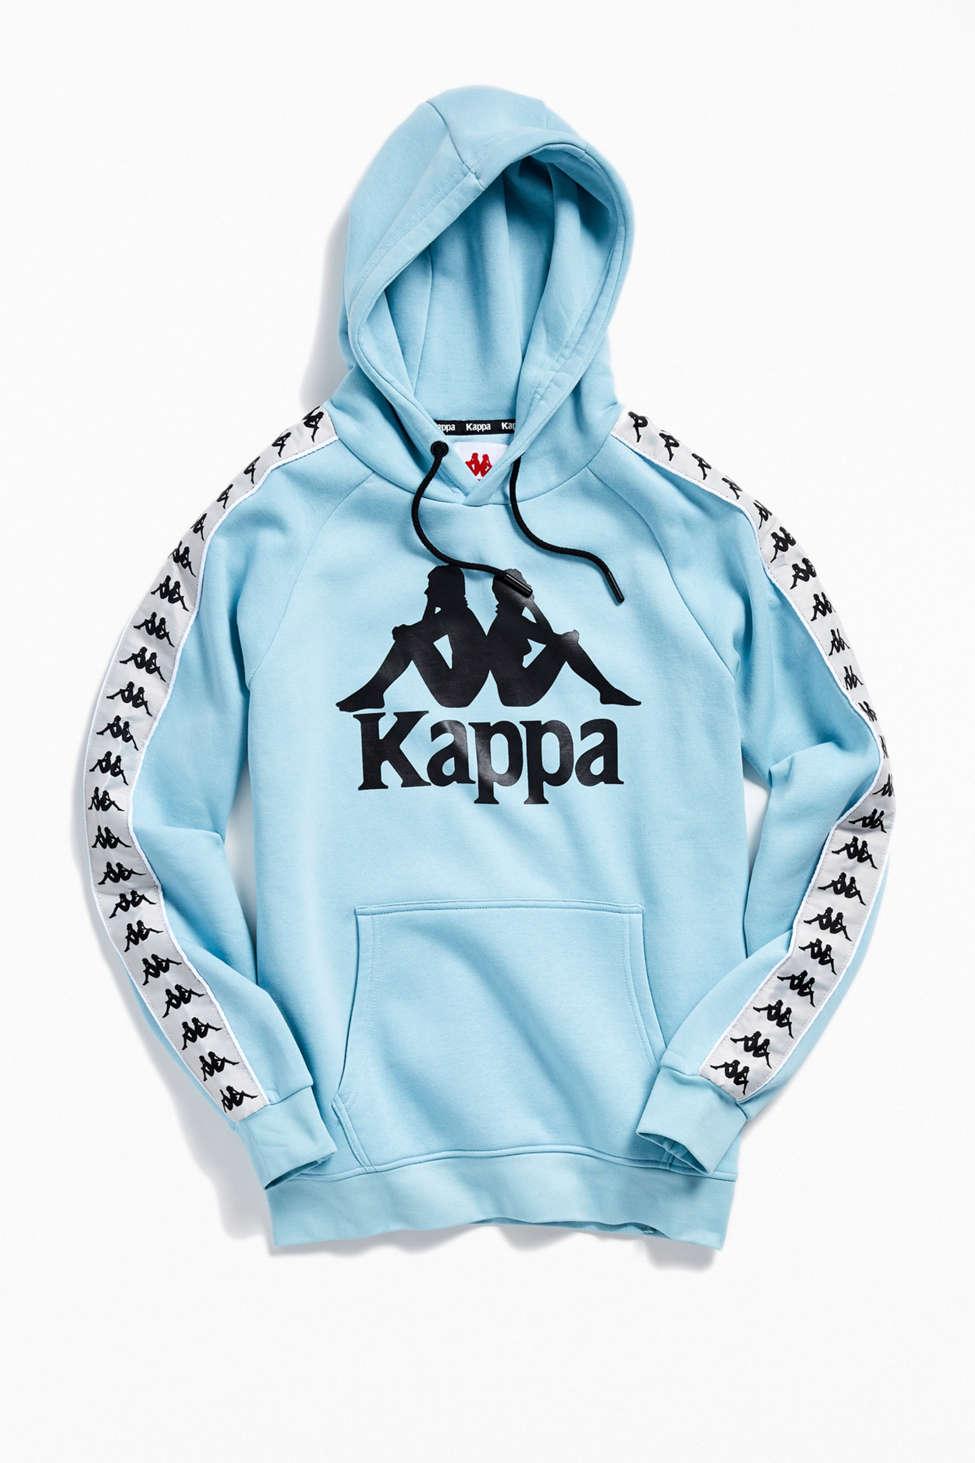 Kappa Cotton Banda Hurtado Hoodie Sweatshirt in Blue for Men - Lyst